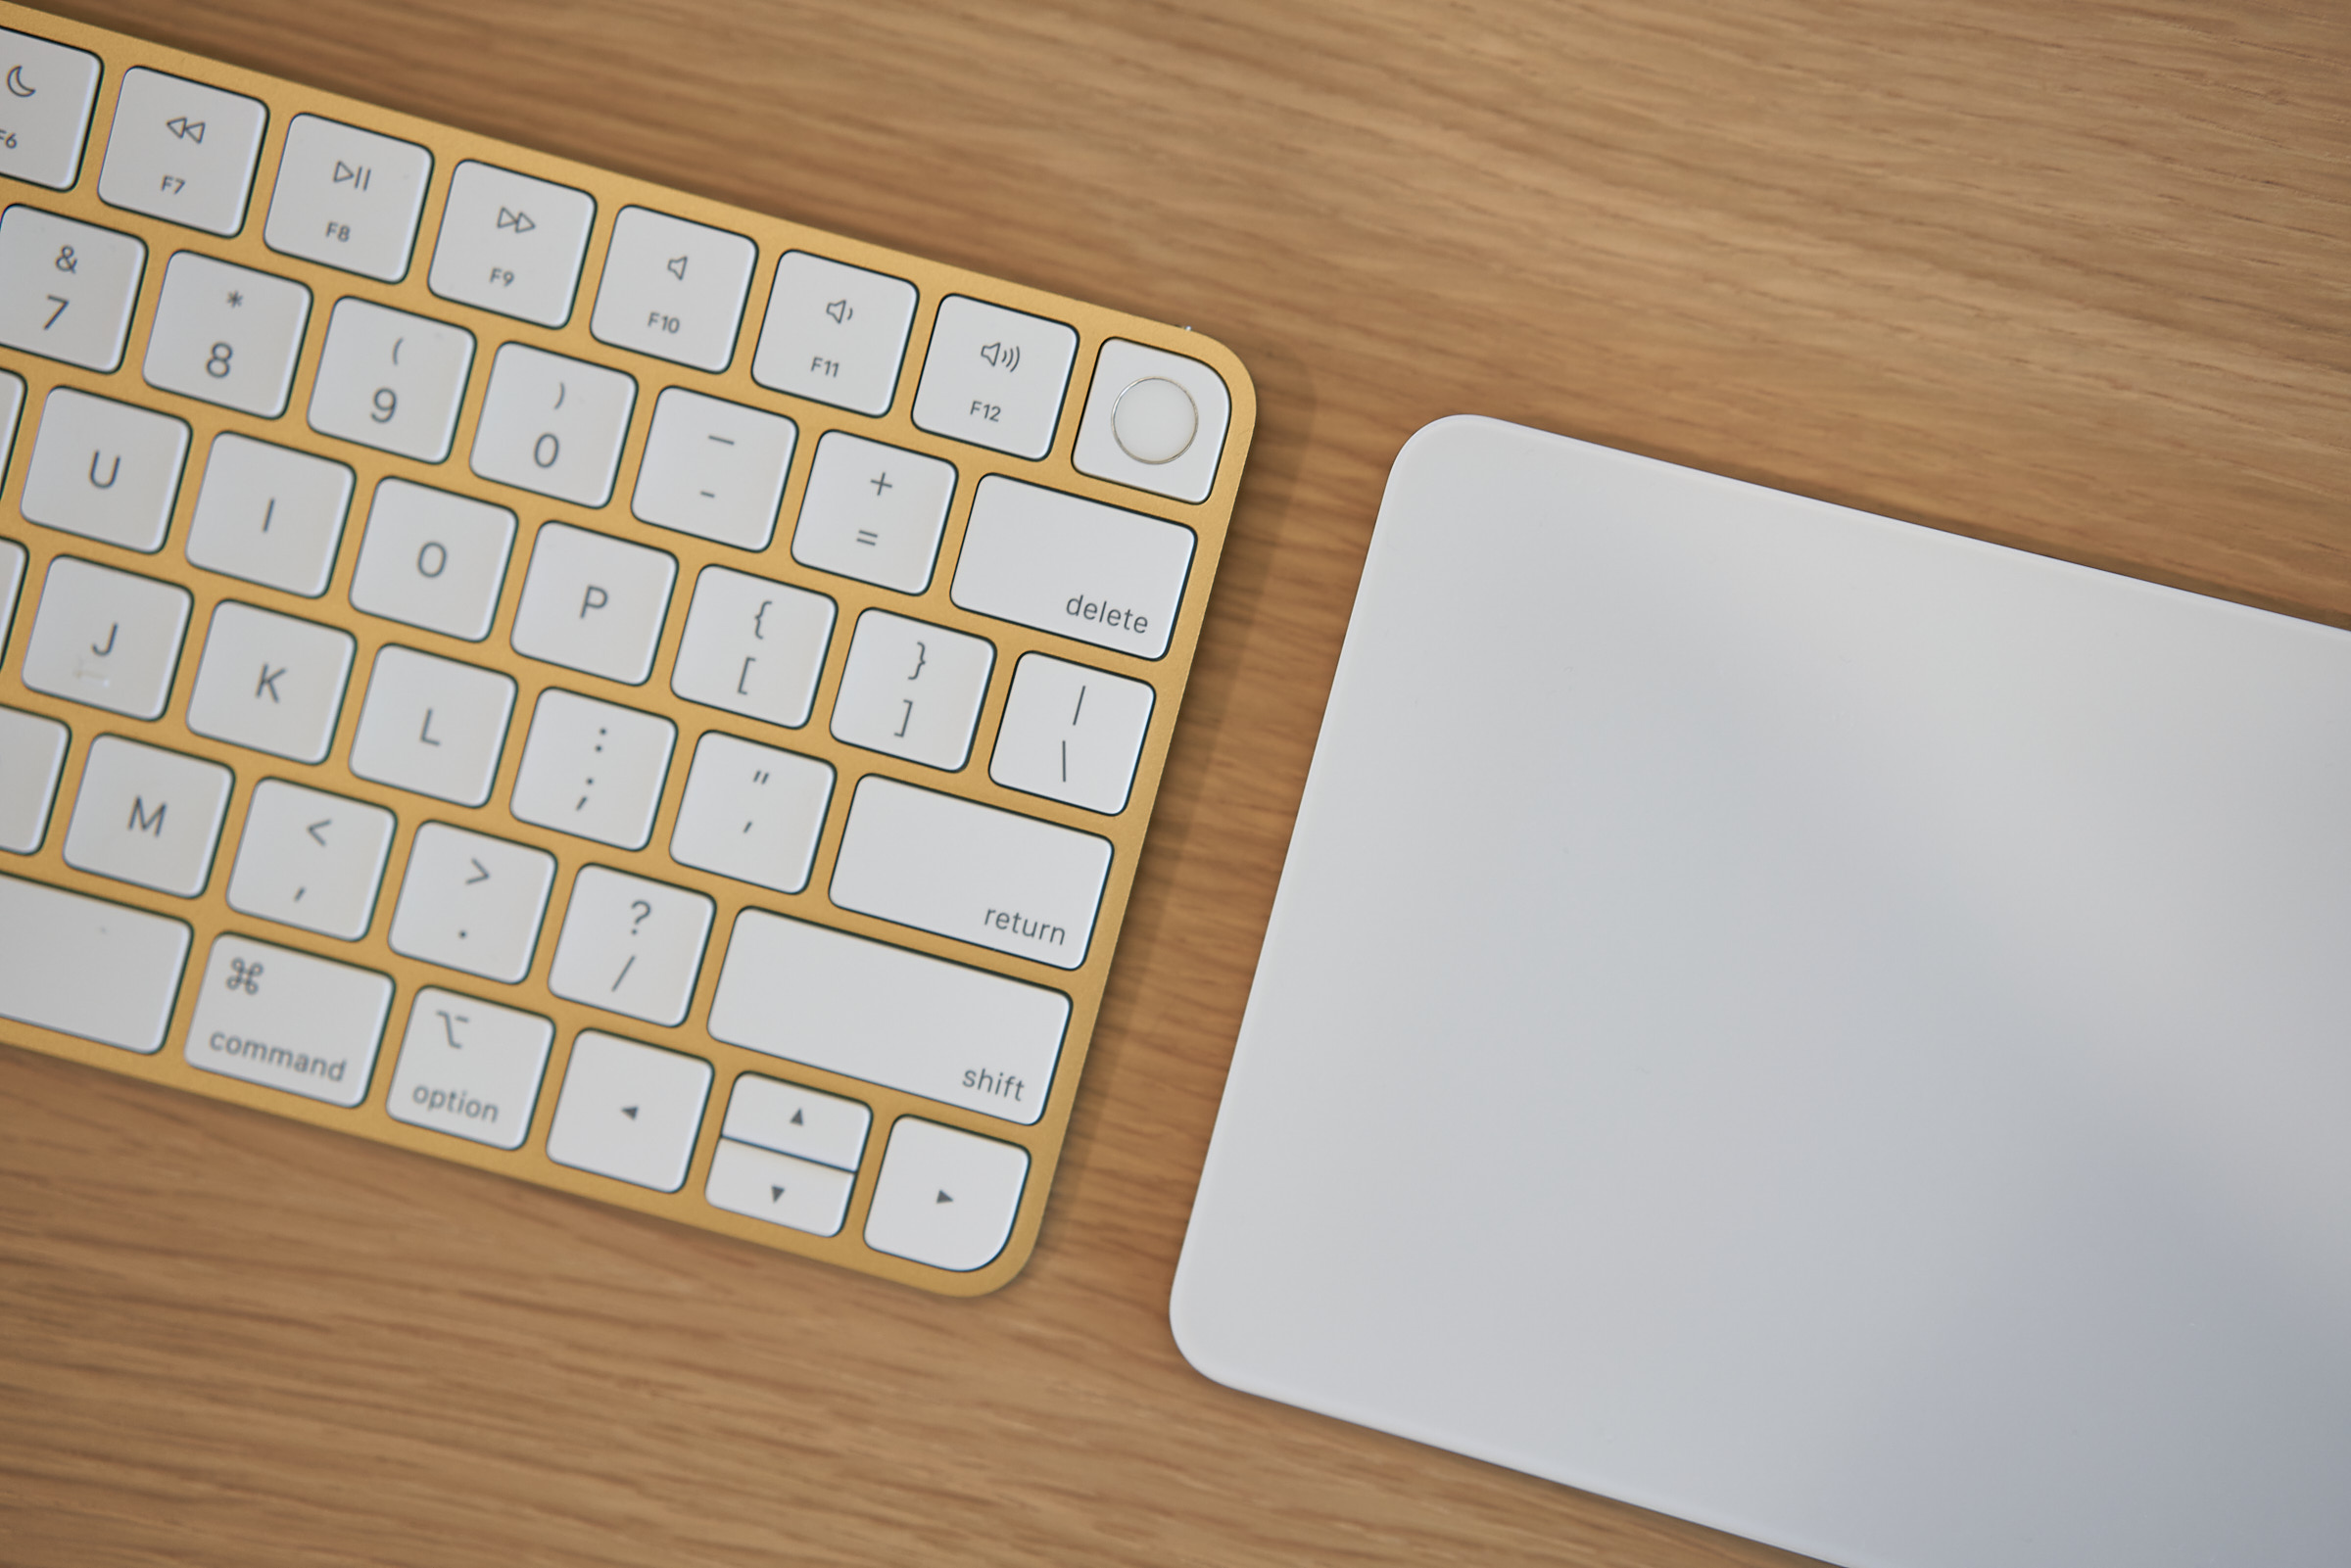 New 24" Apple iMac Keyboard and Trackpad